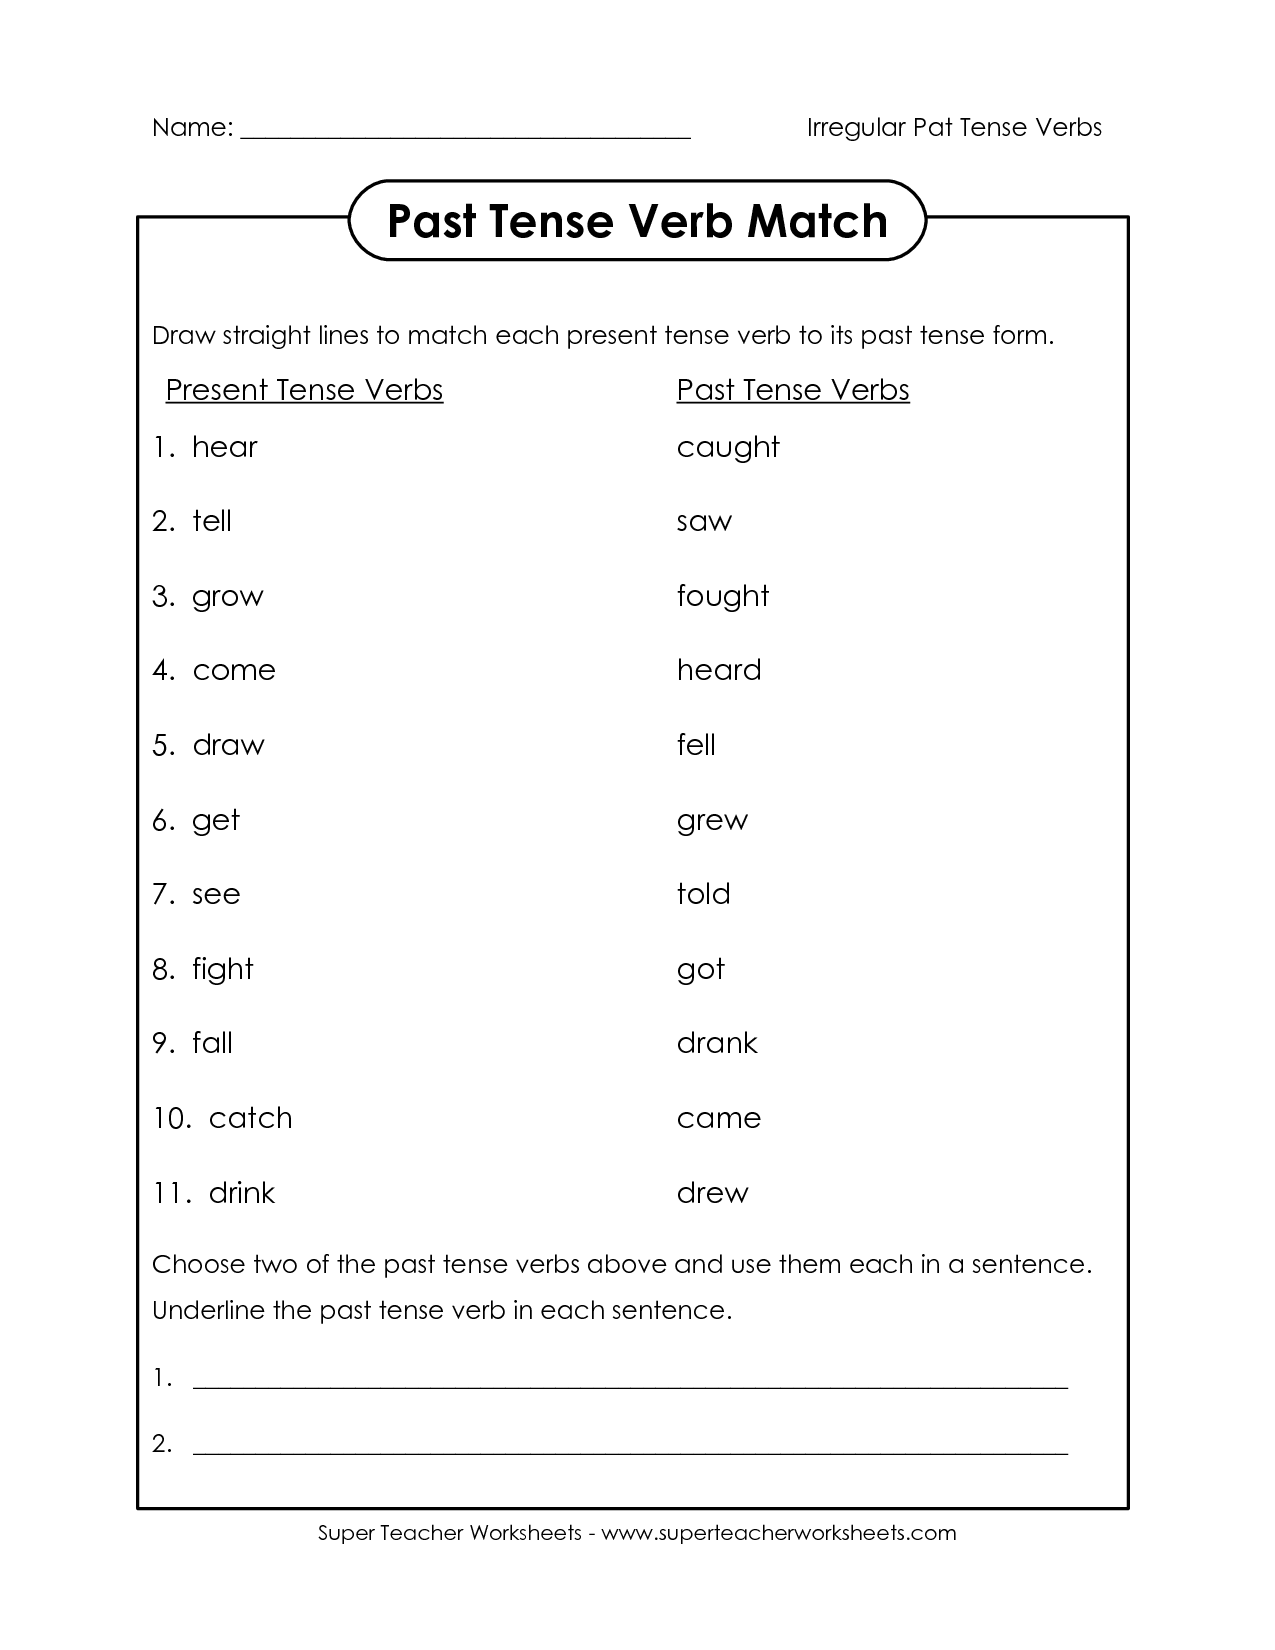 18-best-images-of-past-tense-verbs-worksheets-irregular-past-tense-verb-worksheet-past-tense